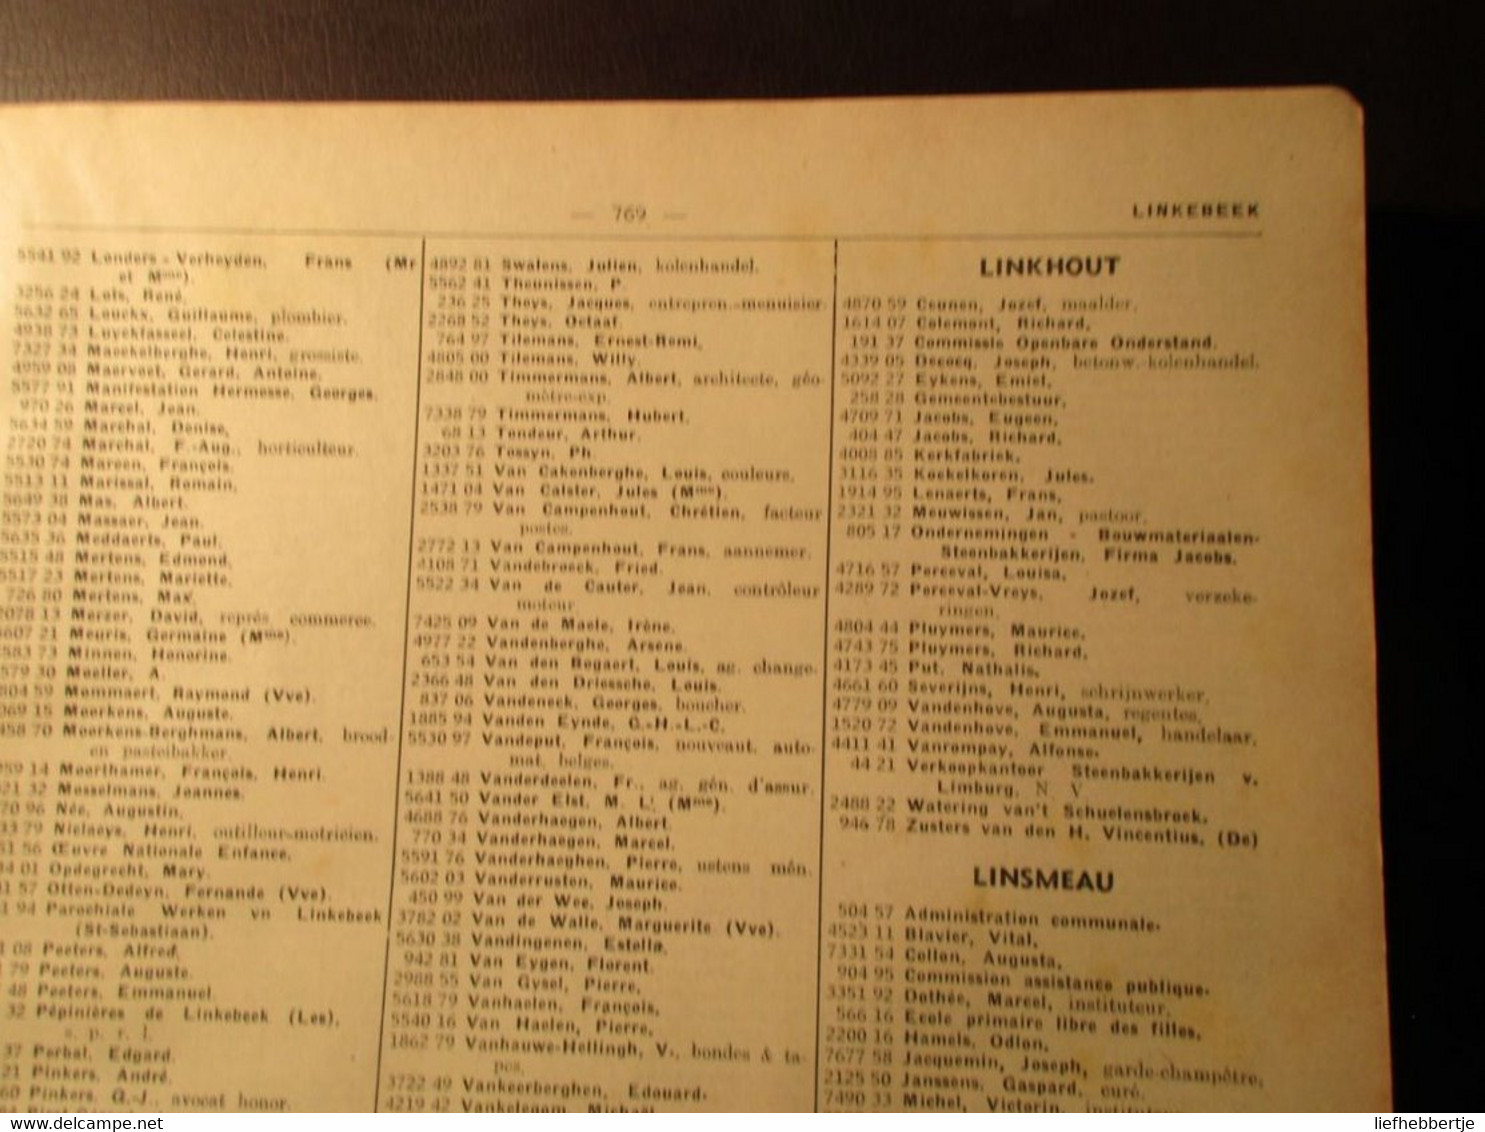 Listes des comptes de chèques postaux - Lijst der postcheckrekeningen - 1949 - 2 delen - adressenlijsten - genealogie